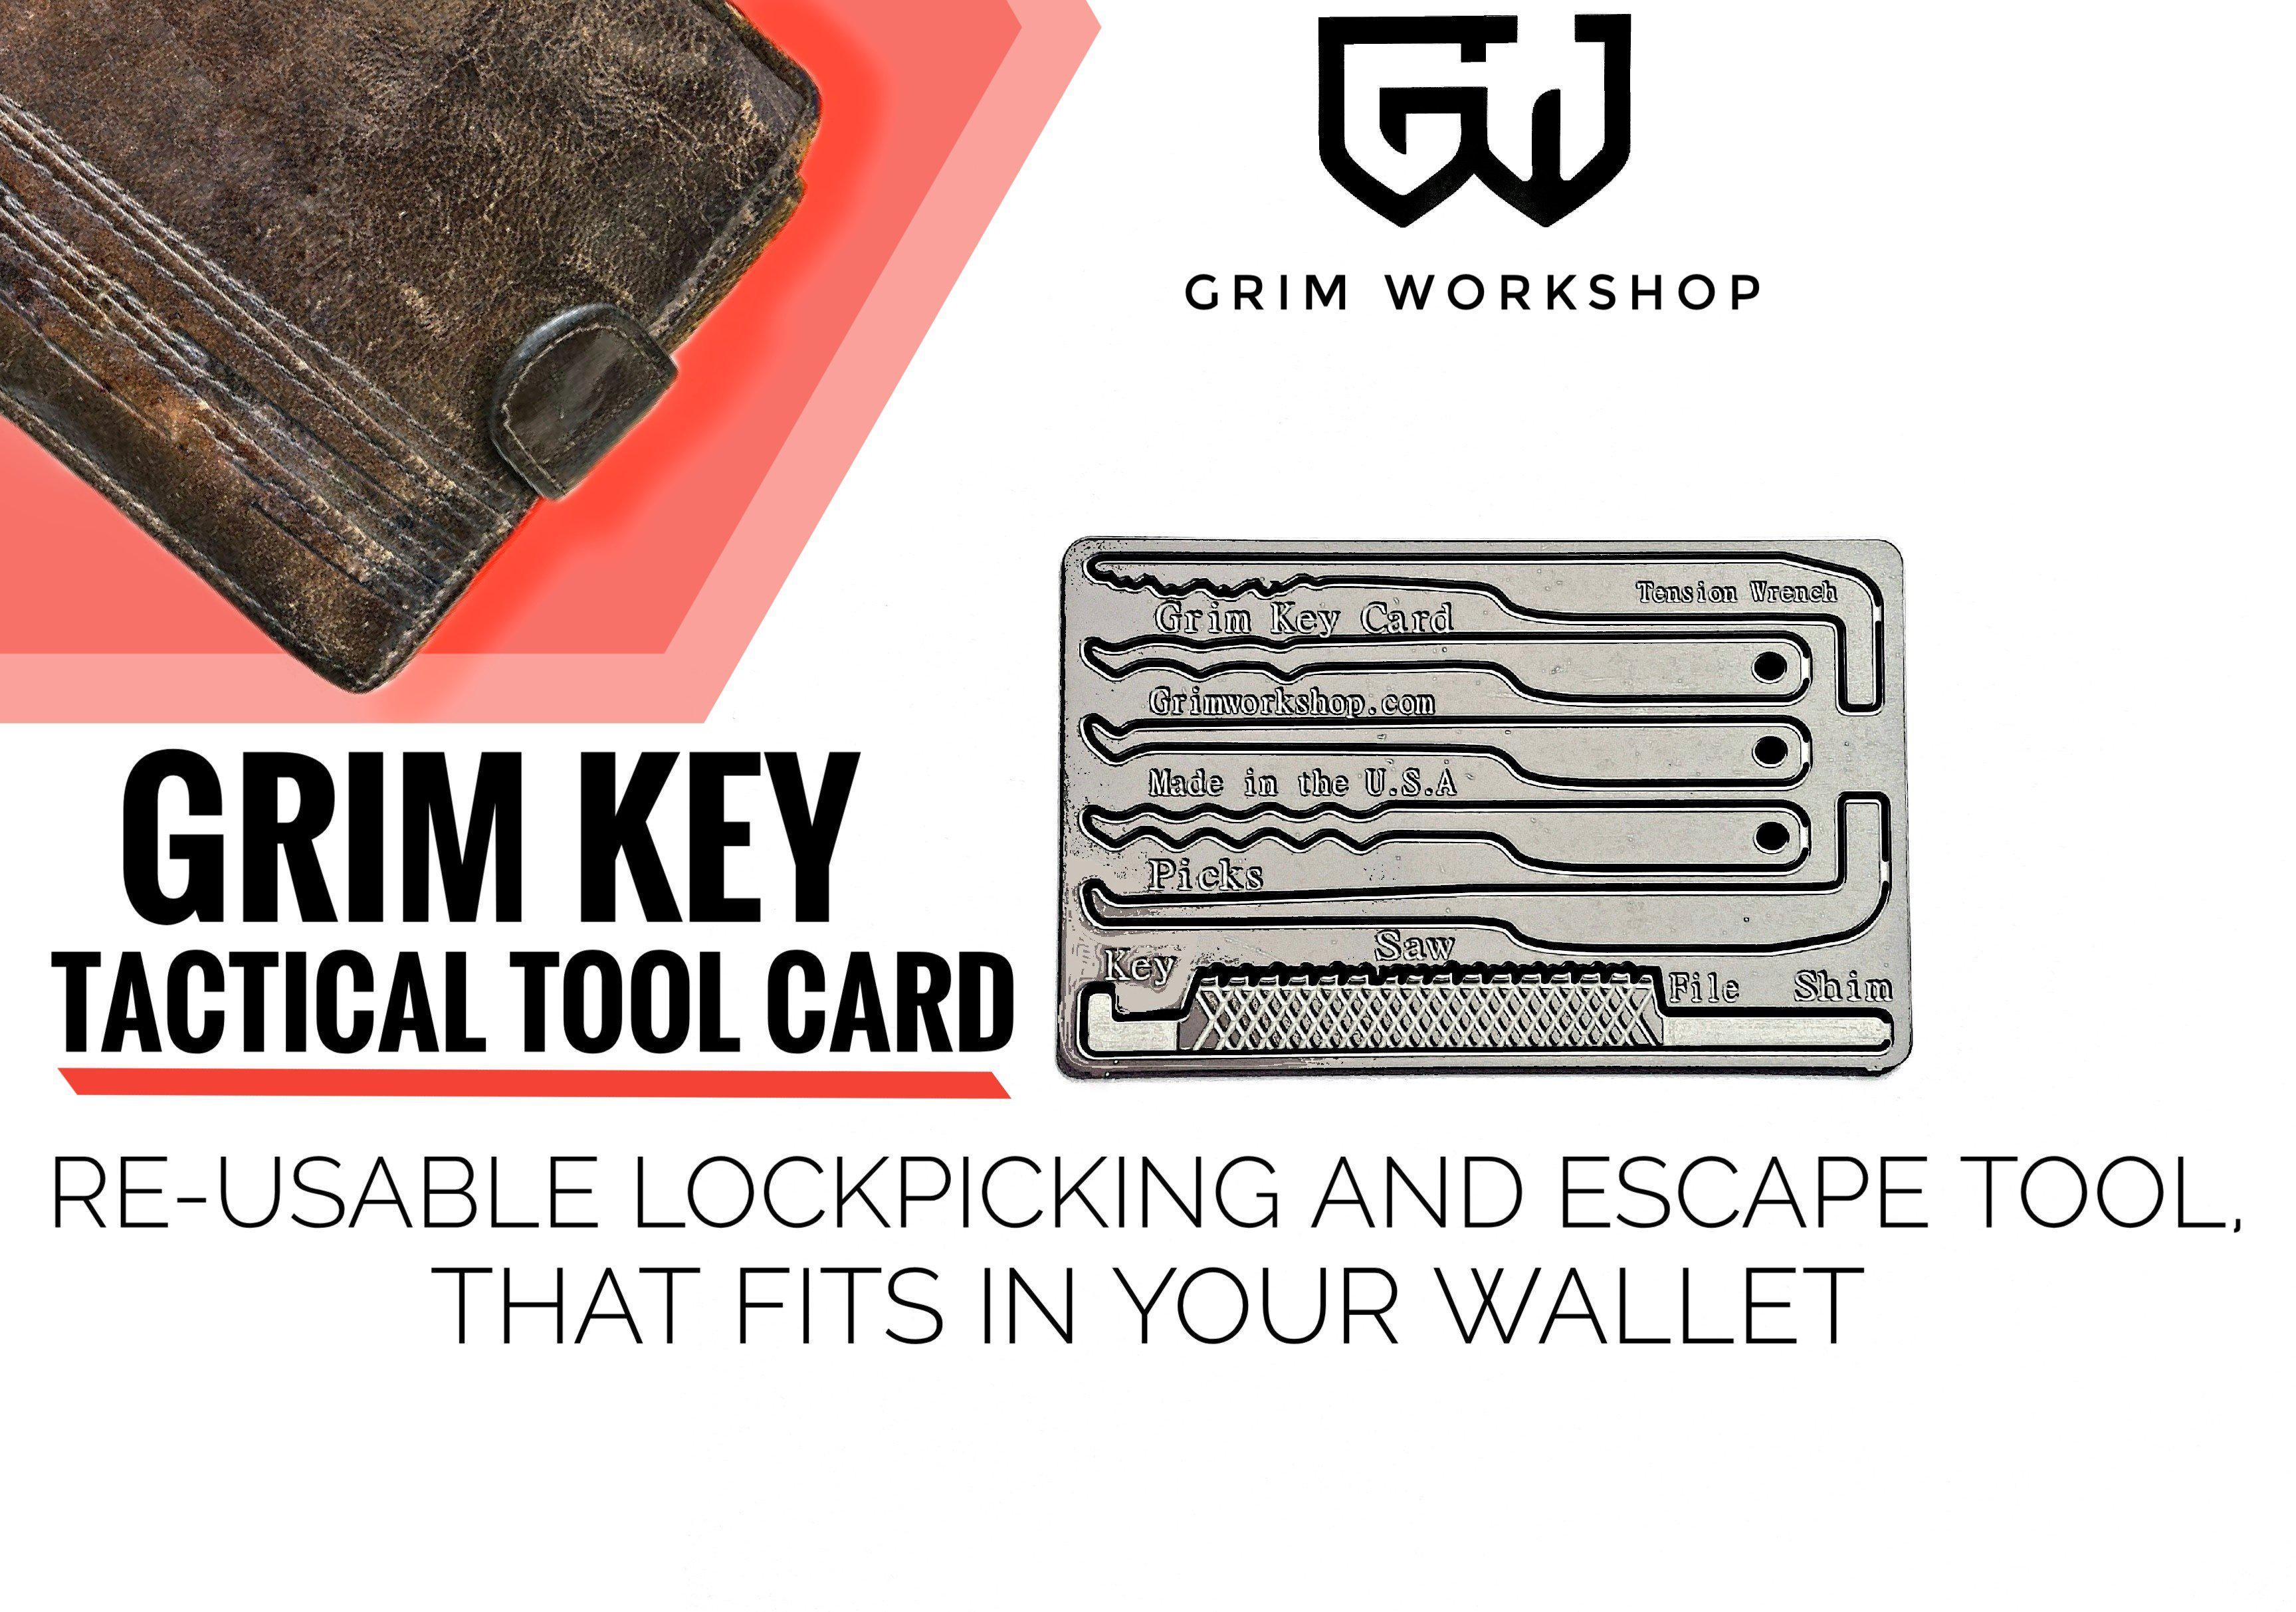 Grim Key Card, Credit Card Lock Pick Set